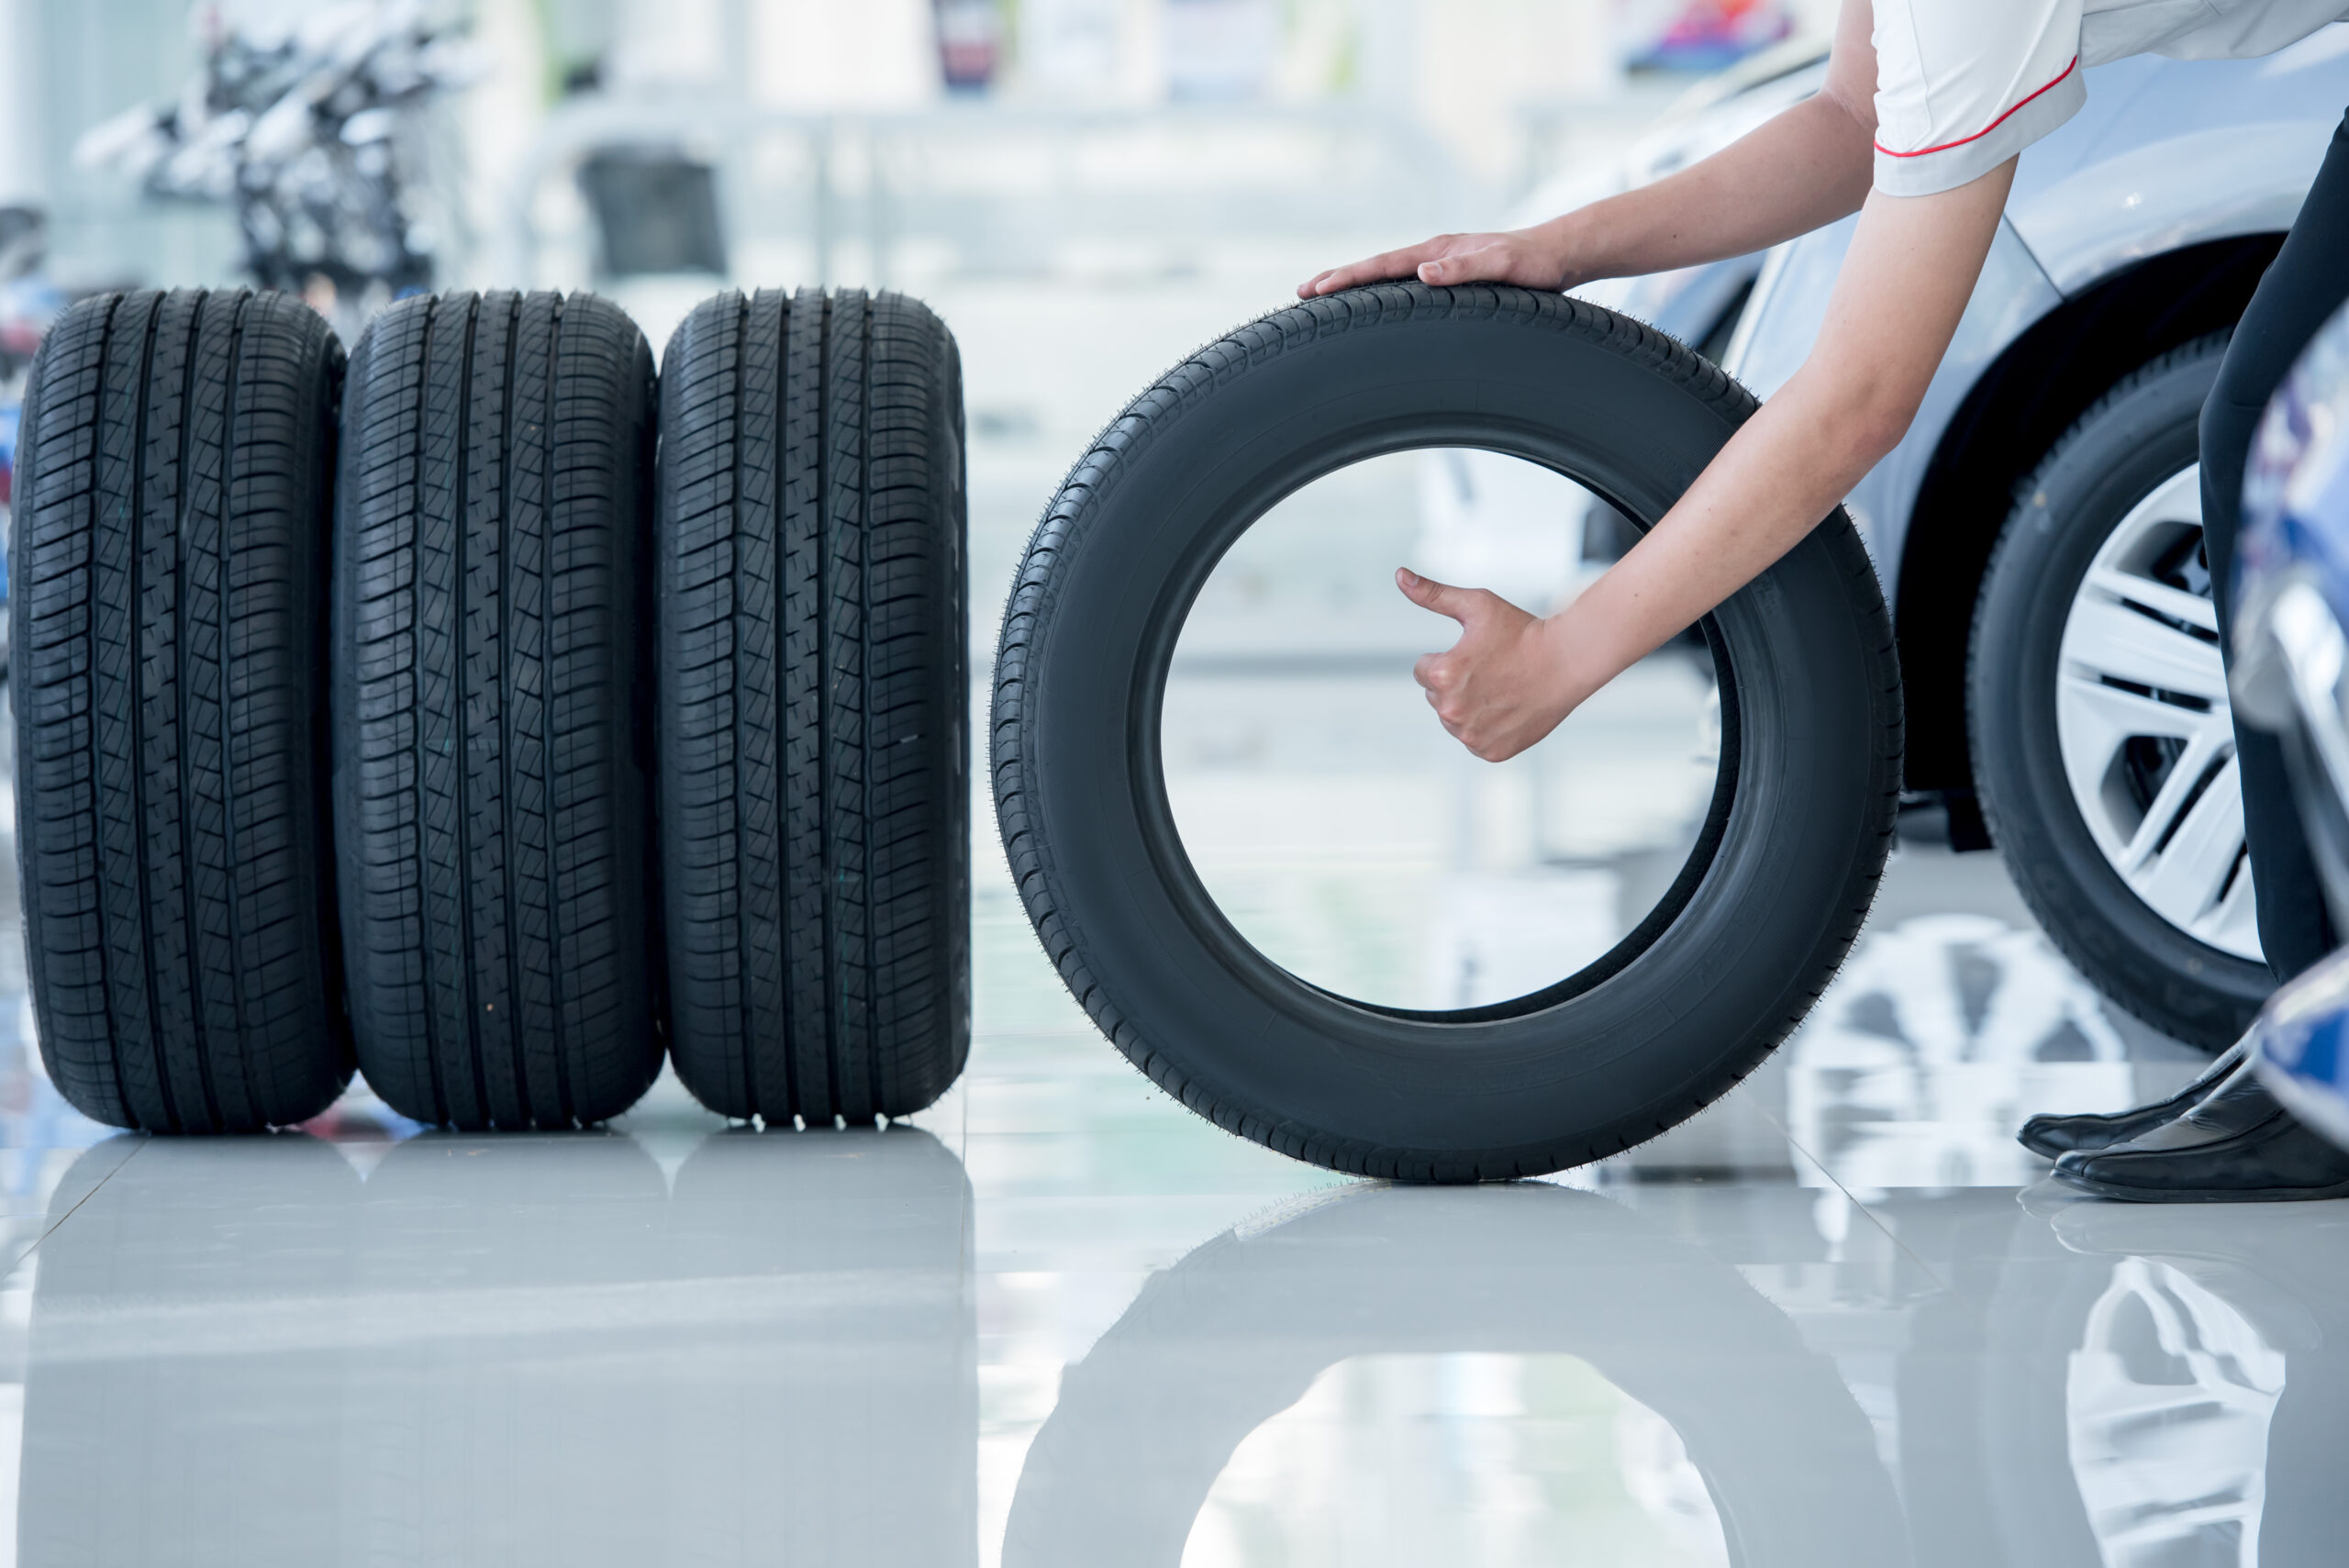 Tecnologia automotiva: Michelin começa a testar pneus à prova de furos